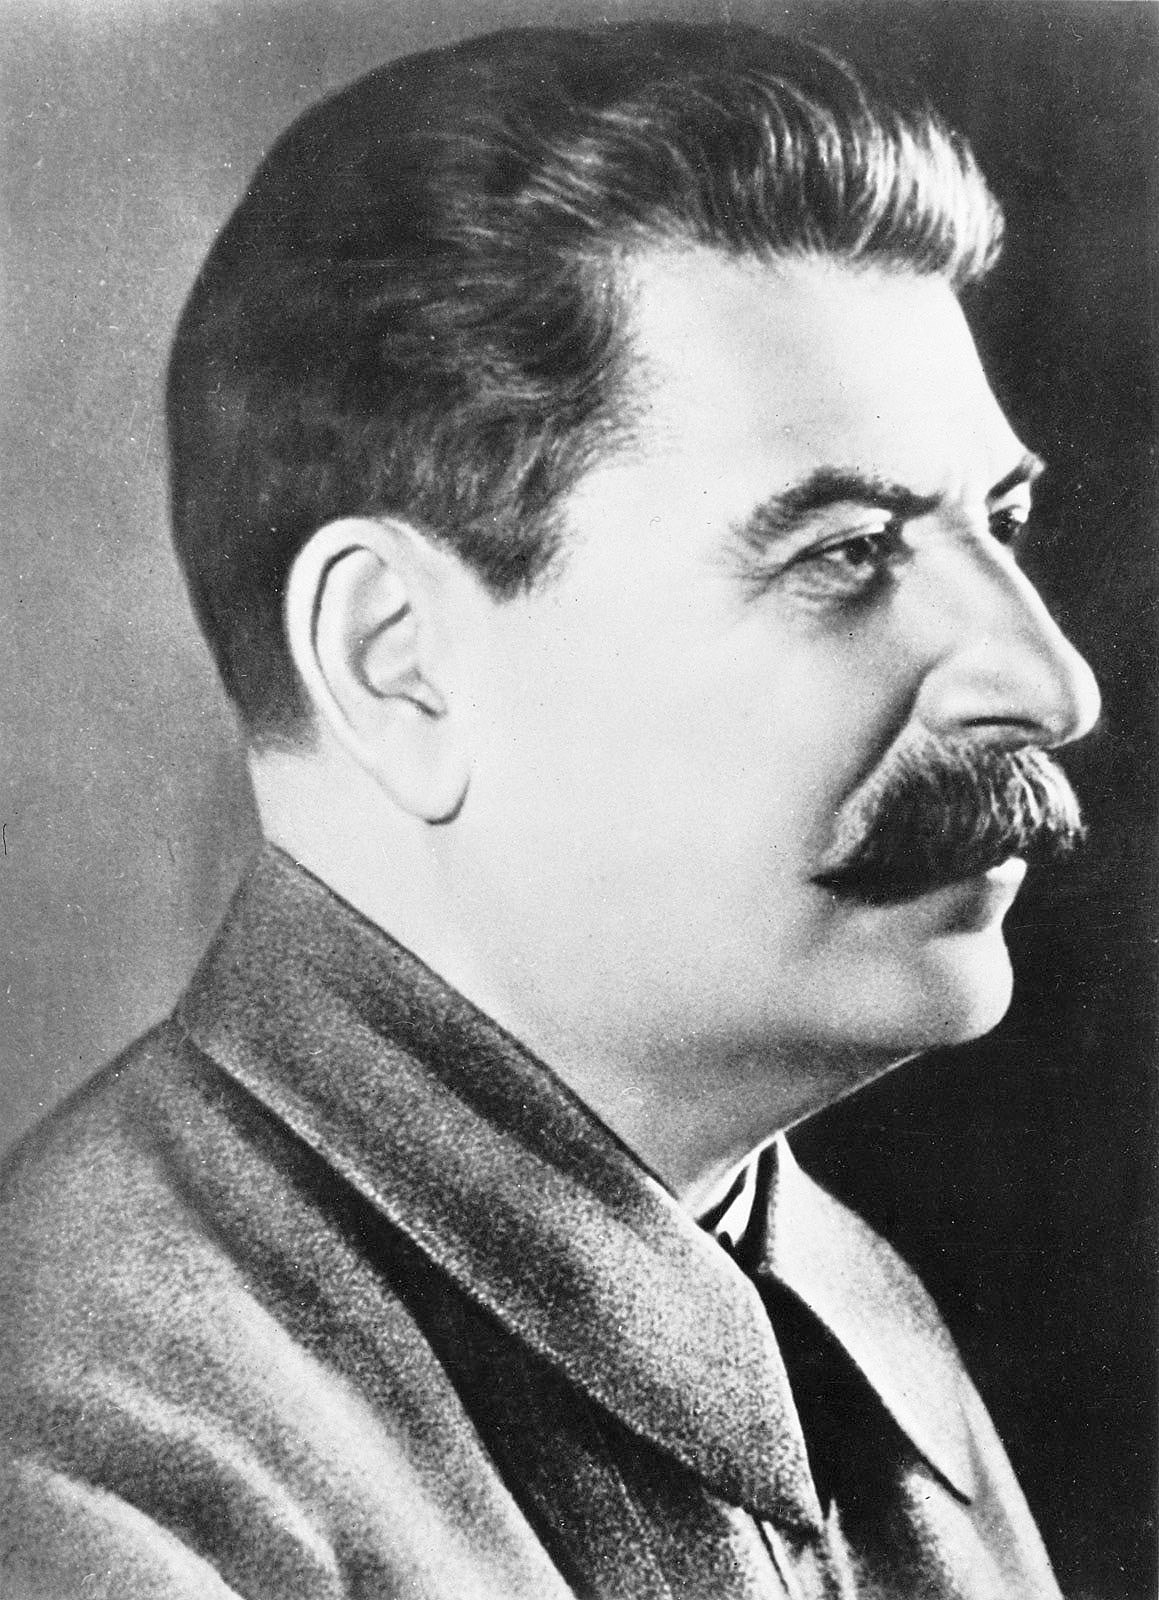 Biografiya-Iosif-Stalin-2